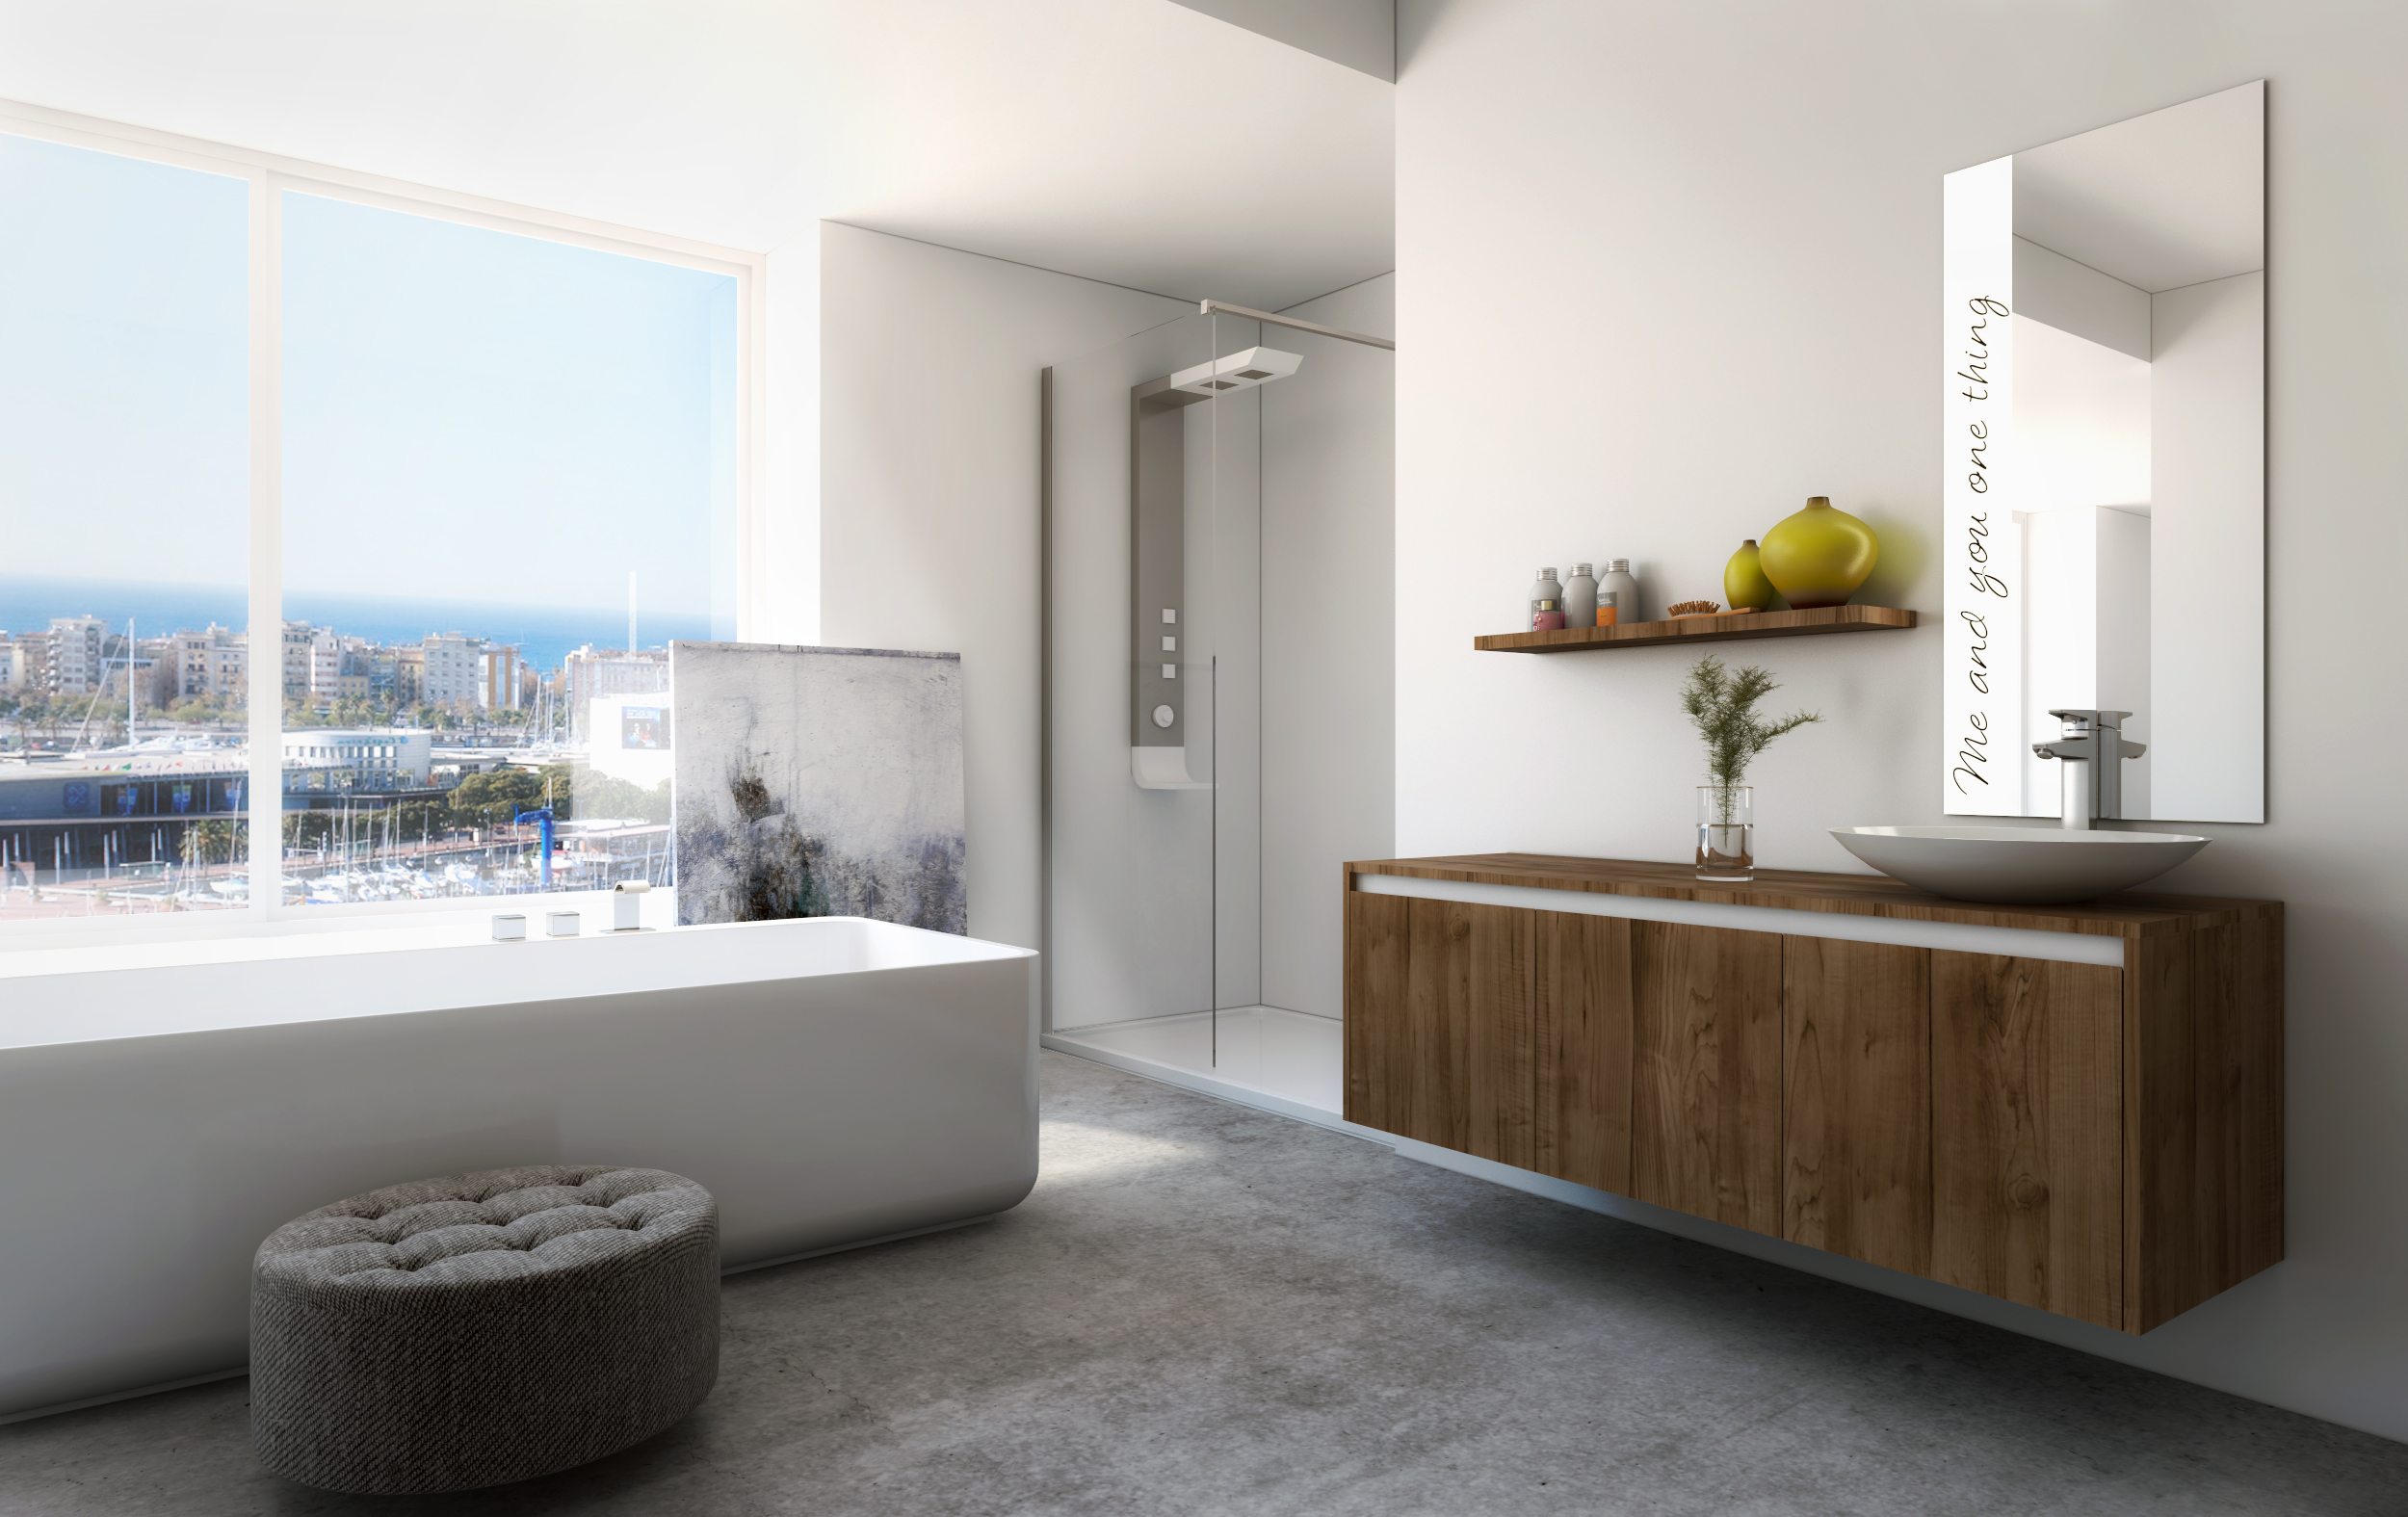 Imágenes 3D mobiliario baño para catálogo